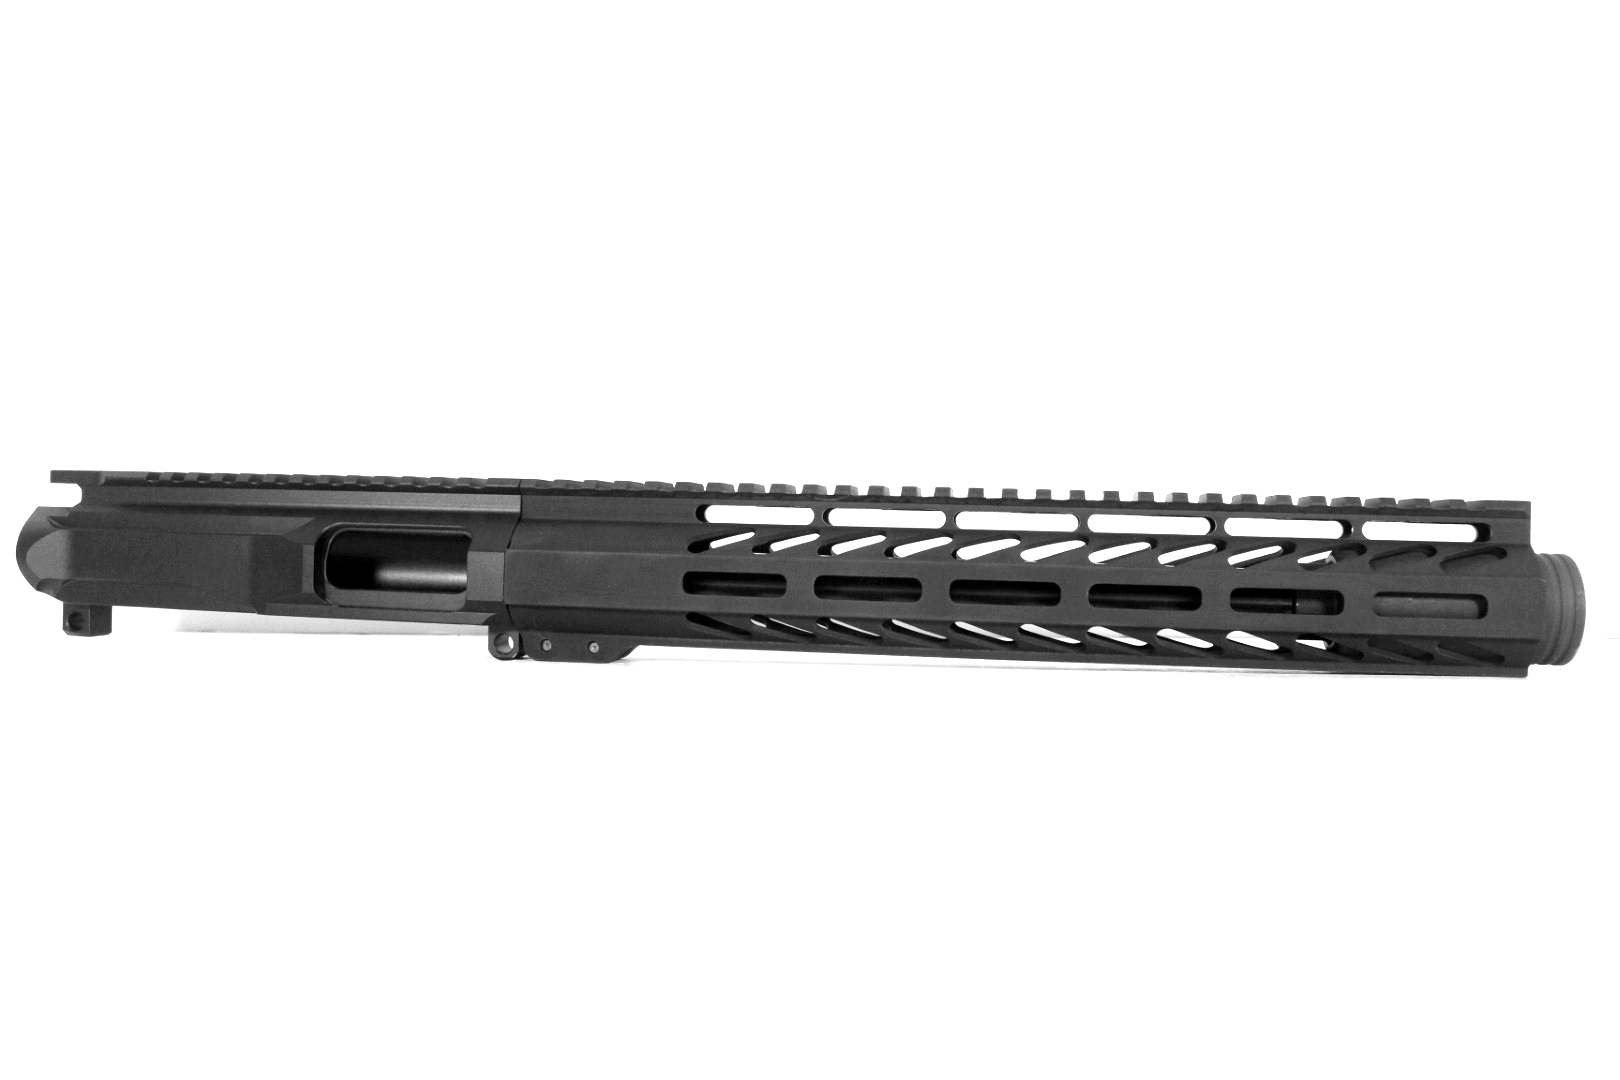 10.5" AR-15 40 S&W Pistol Caliber Melonite Upper w/CAN